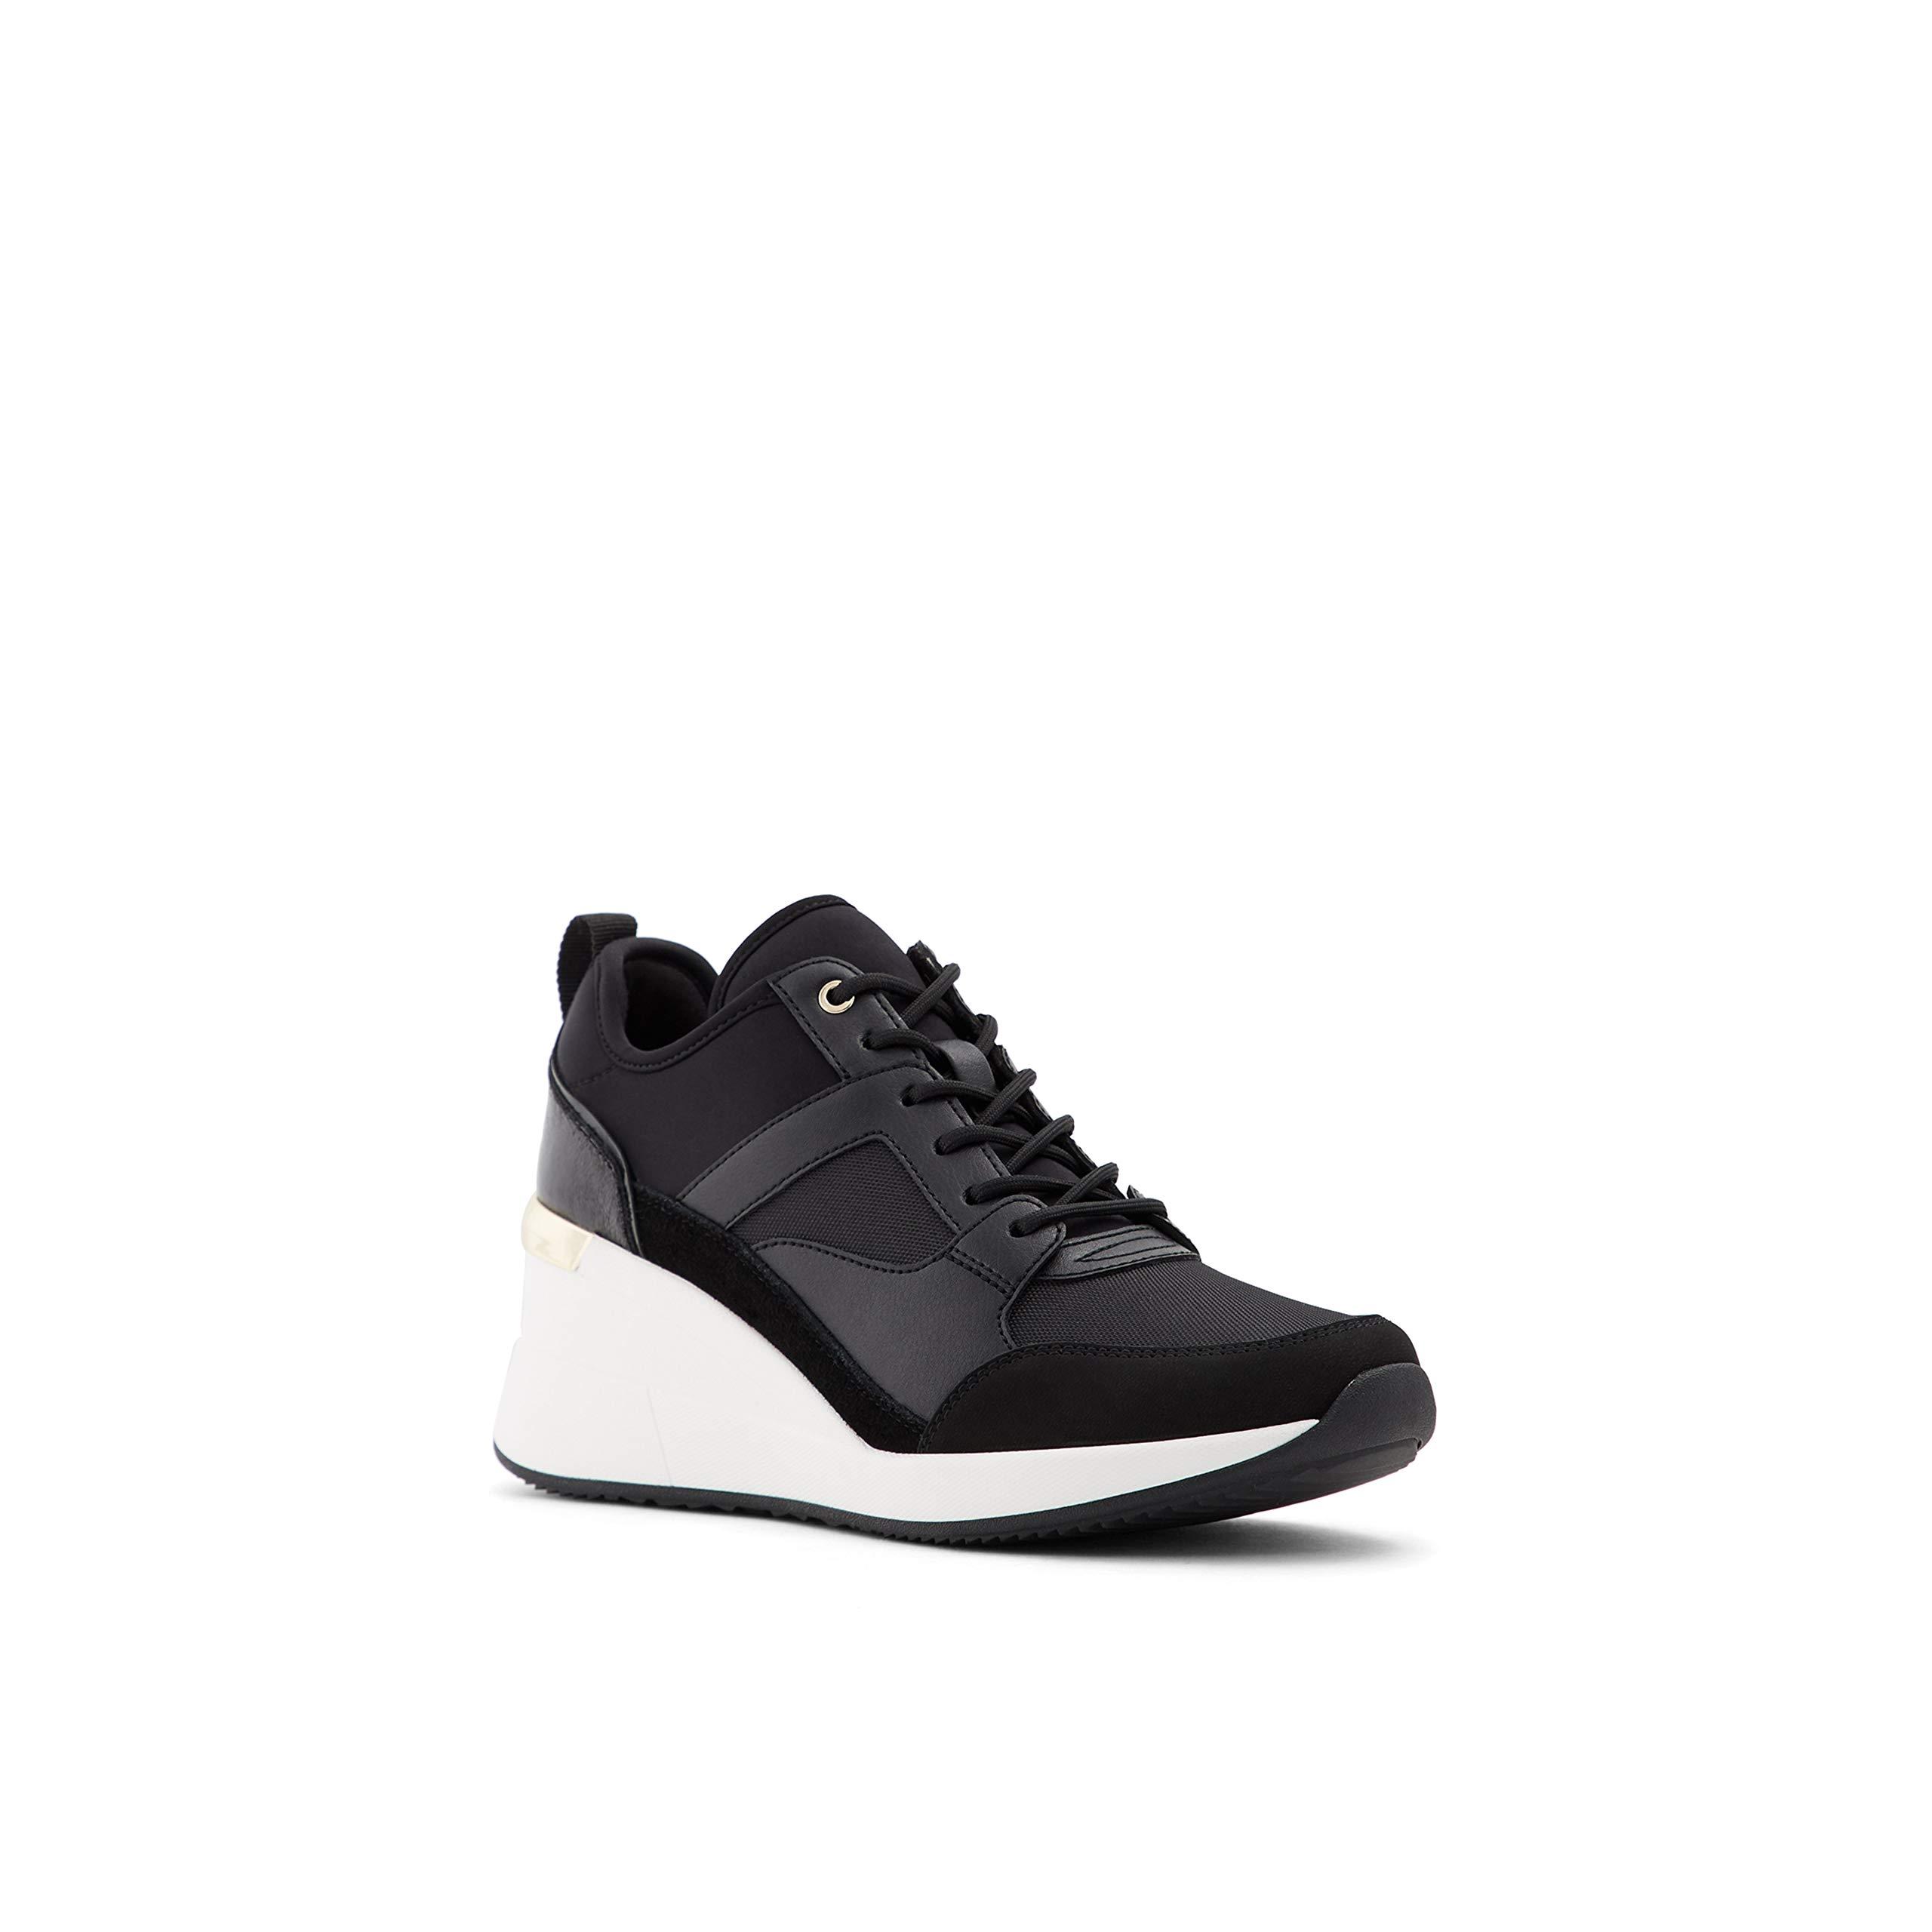 ALDO Synthetic Thrundra Platform Wedge Sneaker in White (Black) - Save 29%  - Lyst